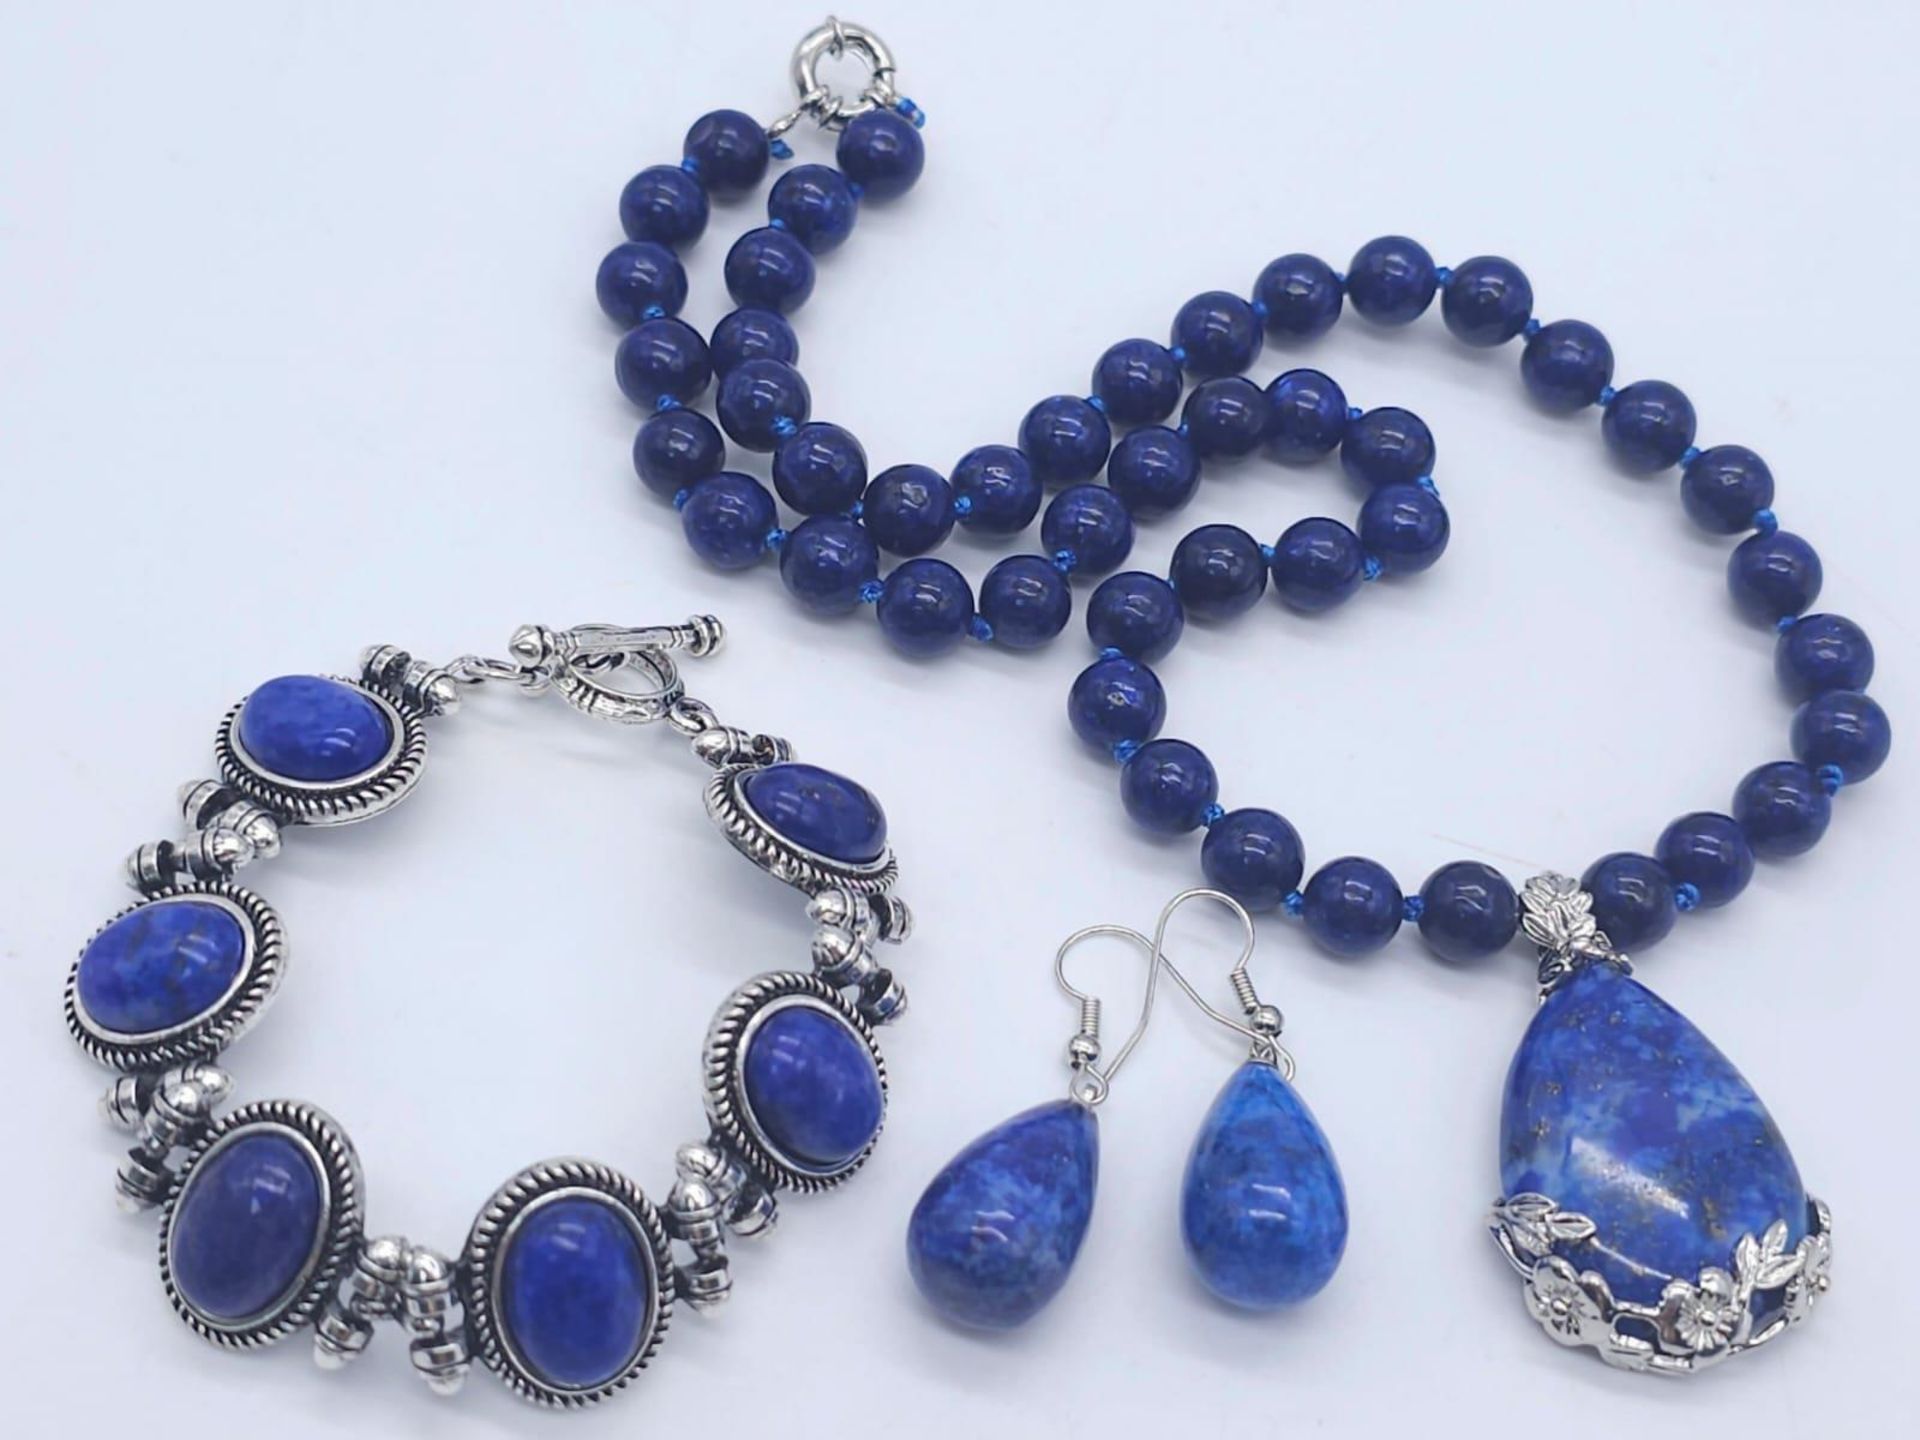 A Lapis Lazuli Suite Comprising of Necklace with Drop Pendant - 42cm and 4cm. Decorative oval